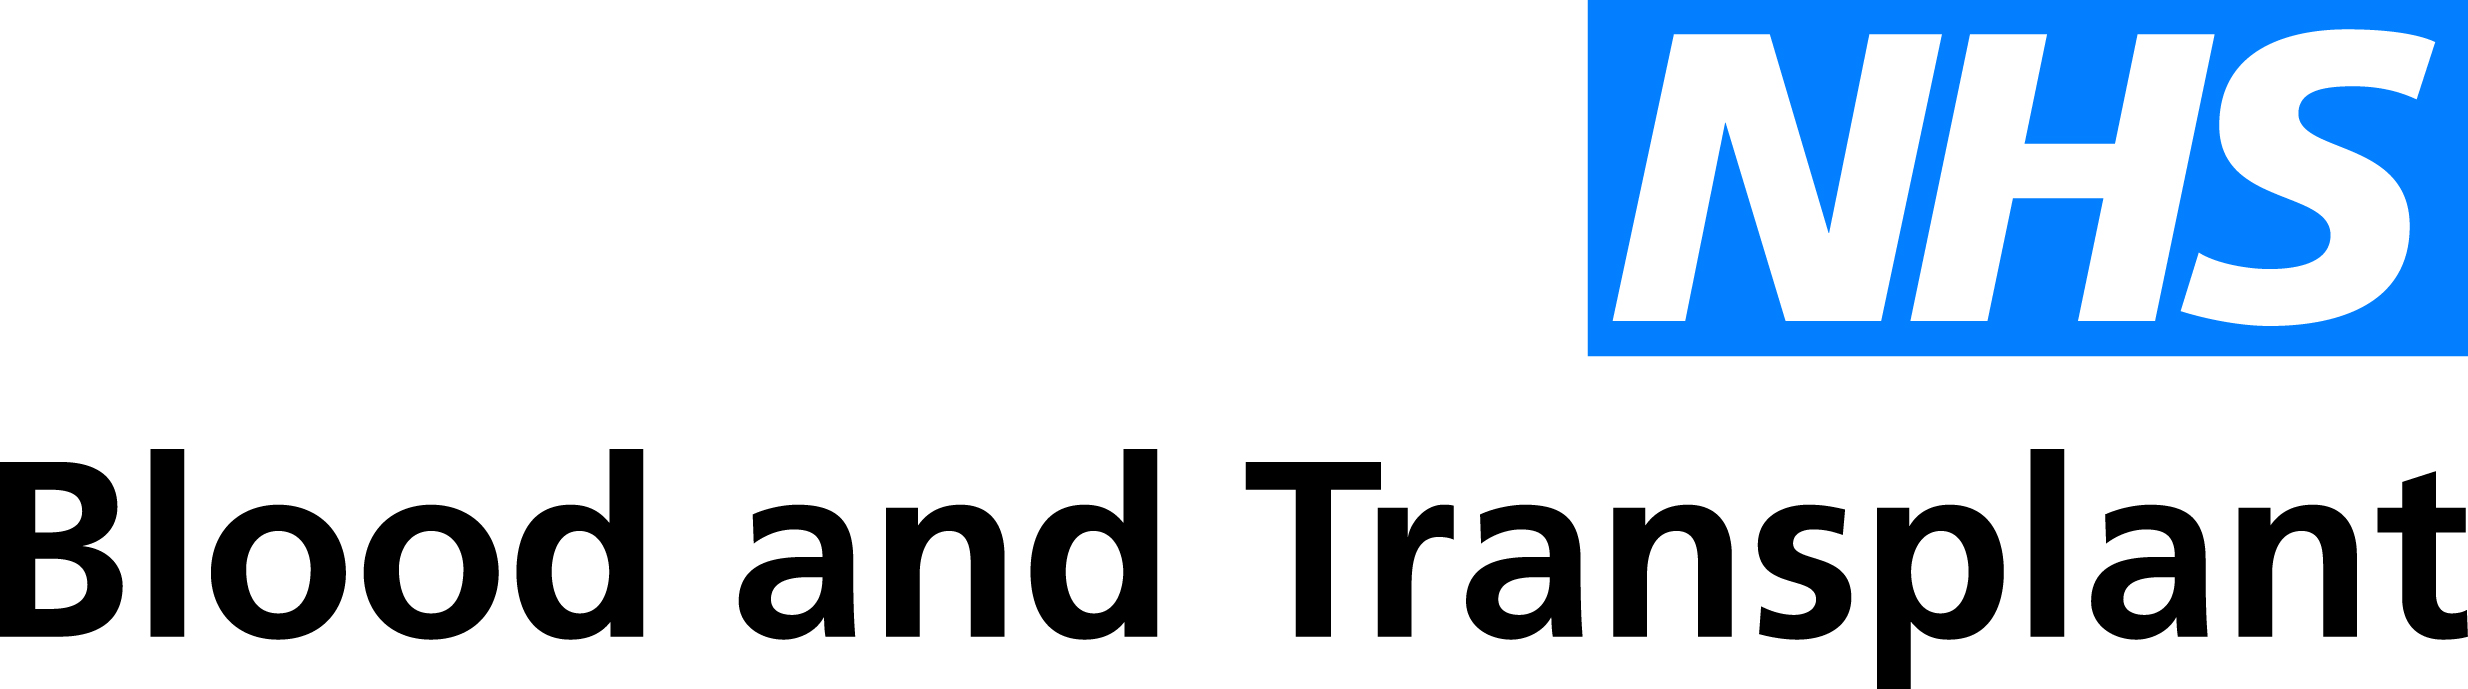 NHS Blood and Transport logo